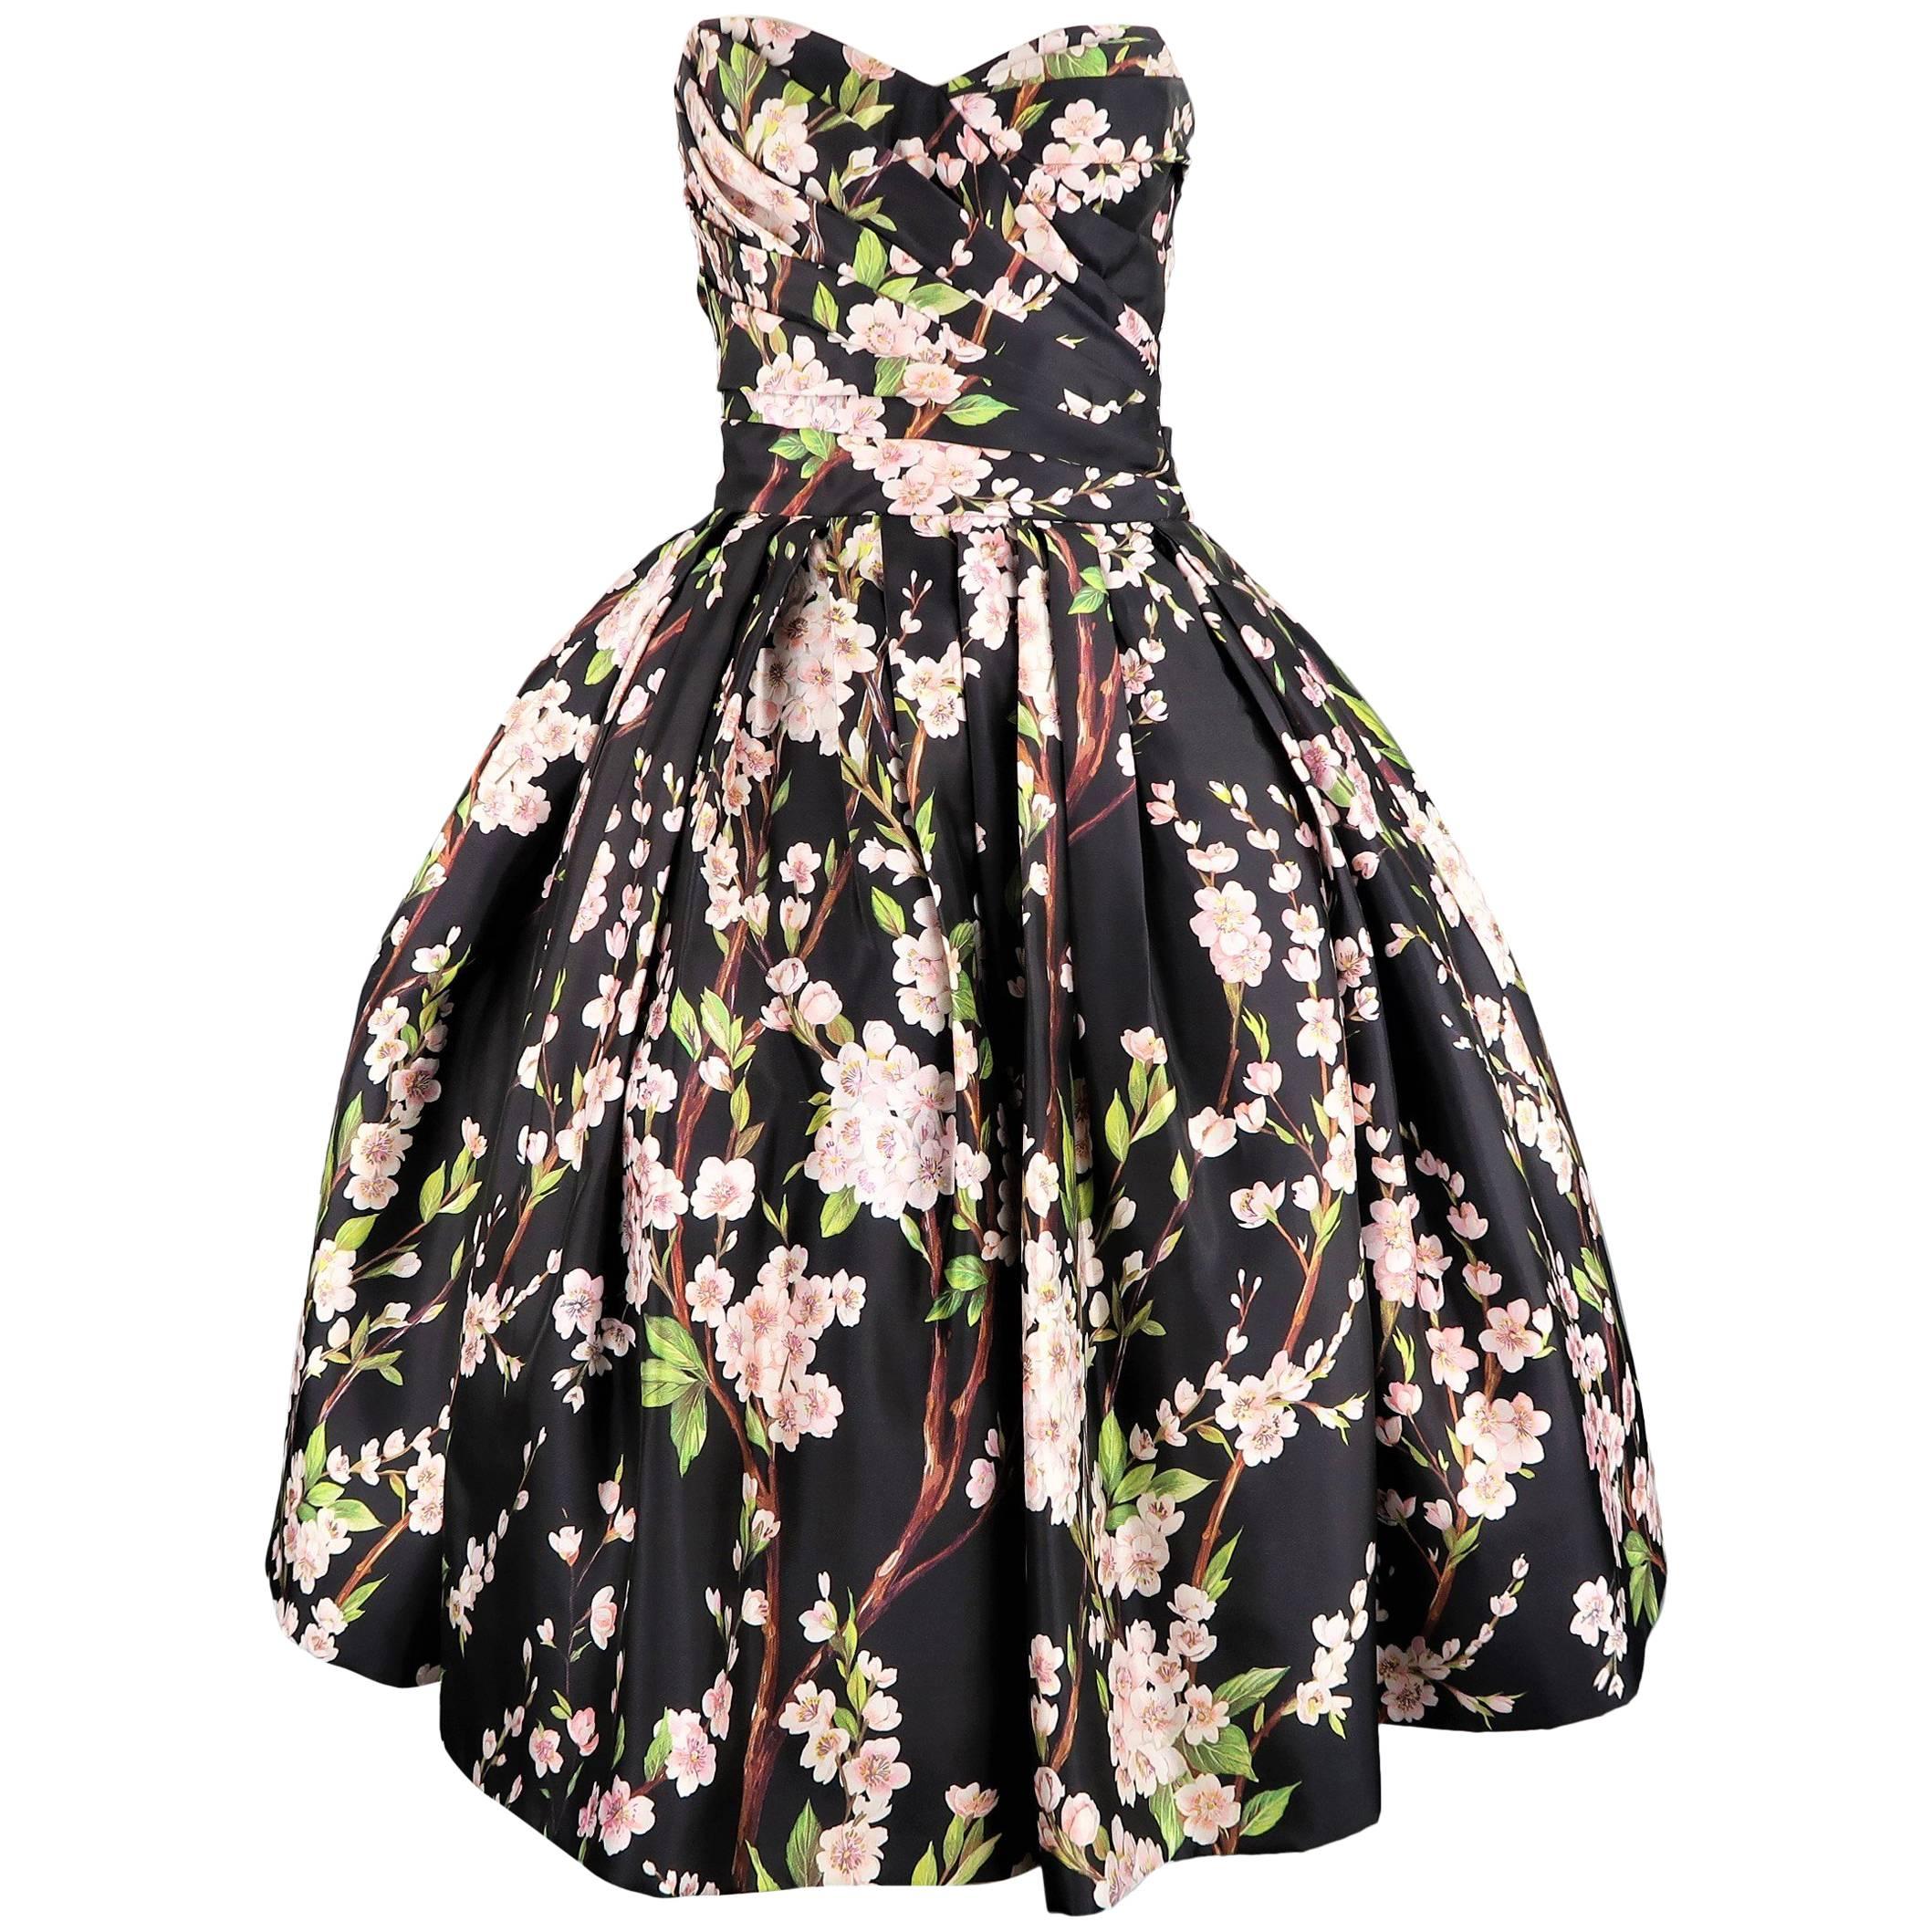 Dolce & Gabbana Dress -  Black Cherry Blossom Cocktail Dress Gown